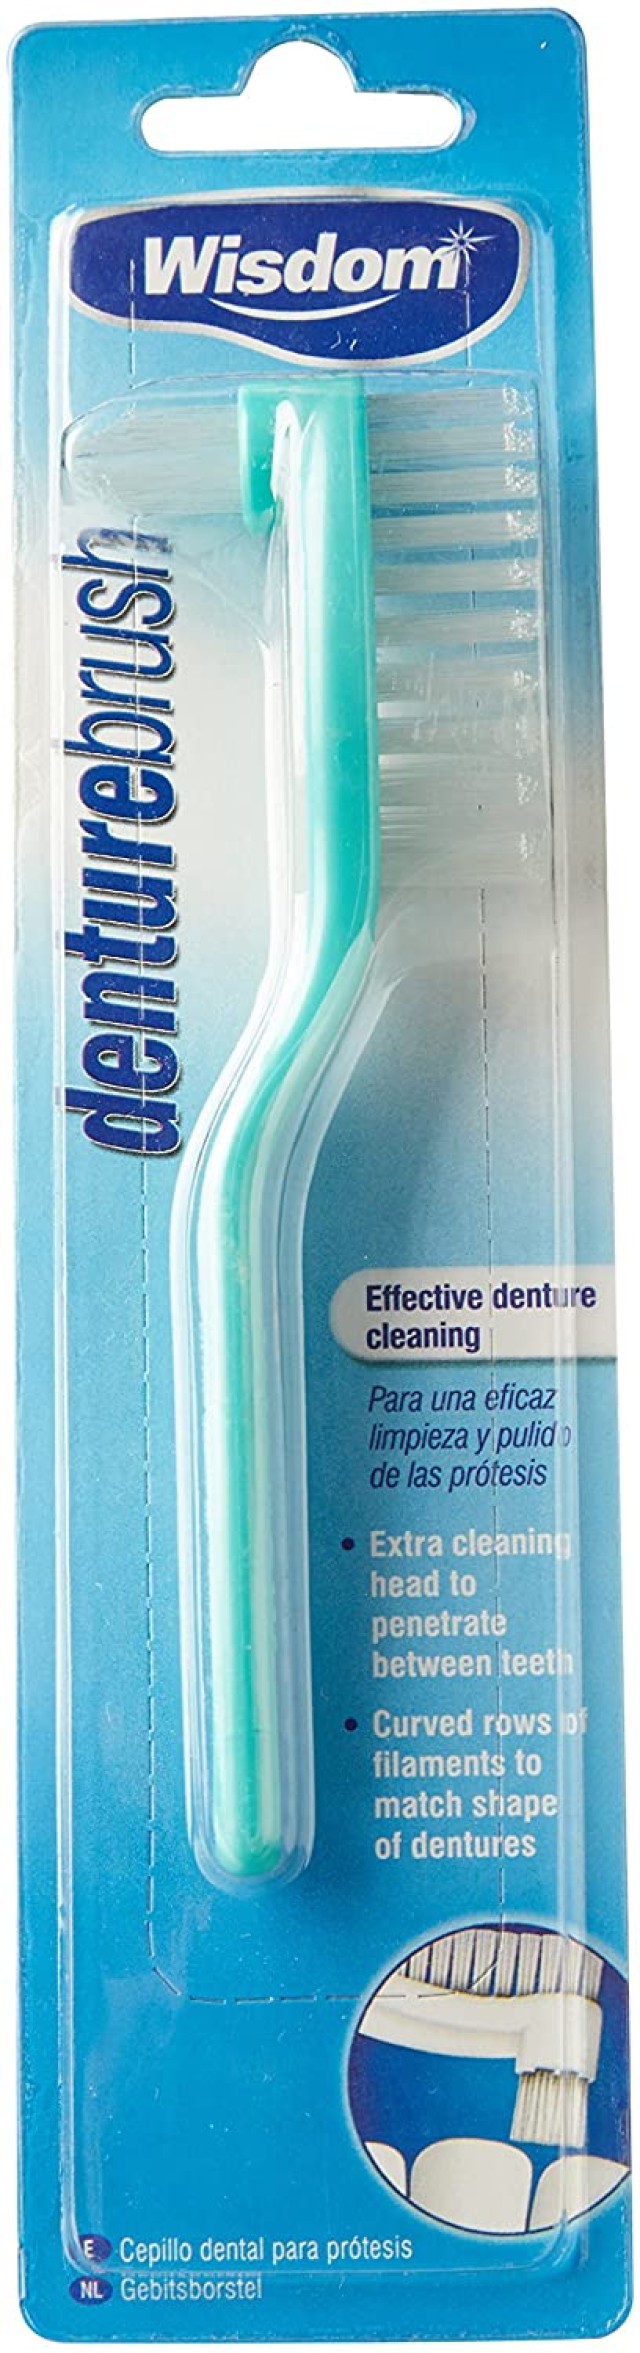 Wisdom Denture Brush Οδοντόβουρτσα Για Τεχνητές Οδοντοστοιχίες Χρώμα:Πράσινο 1 Τεμάχιο